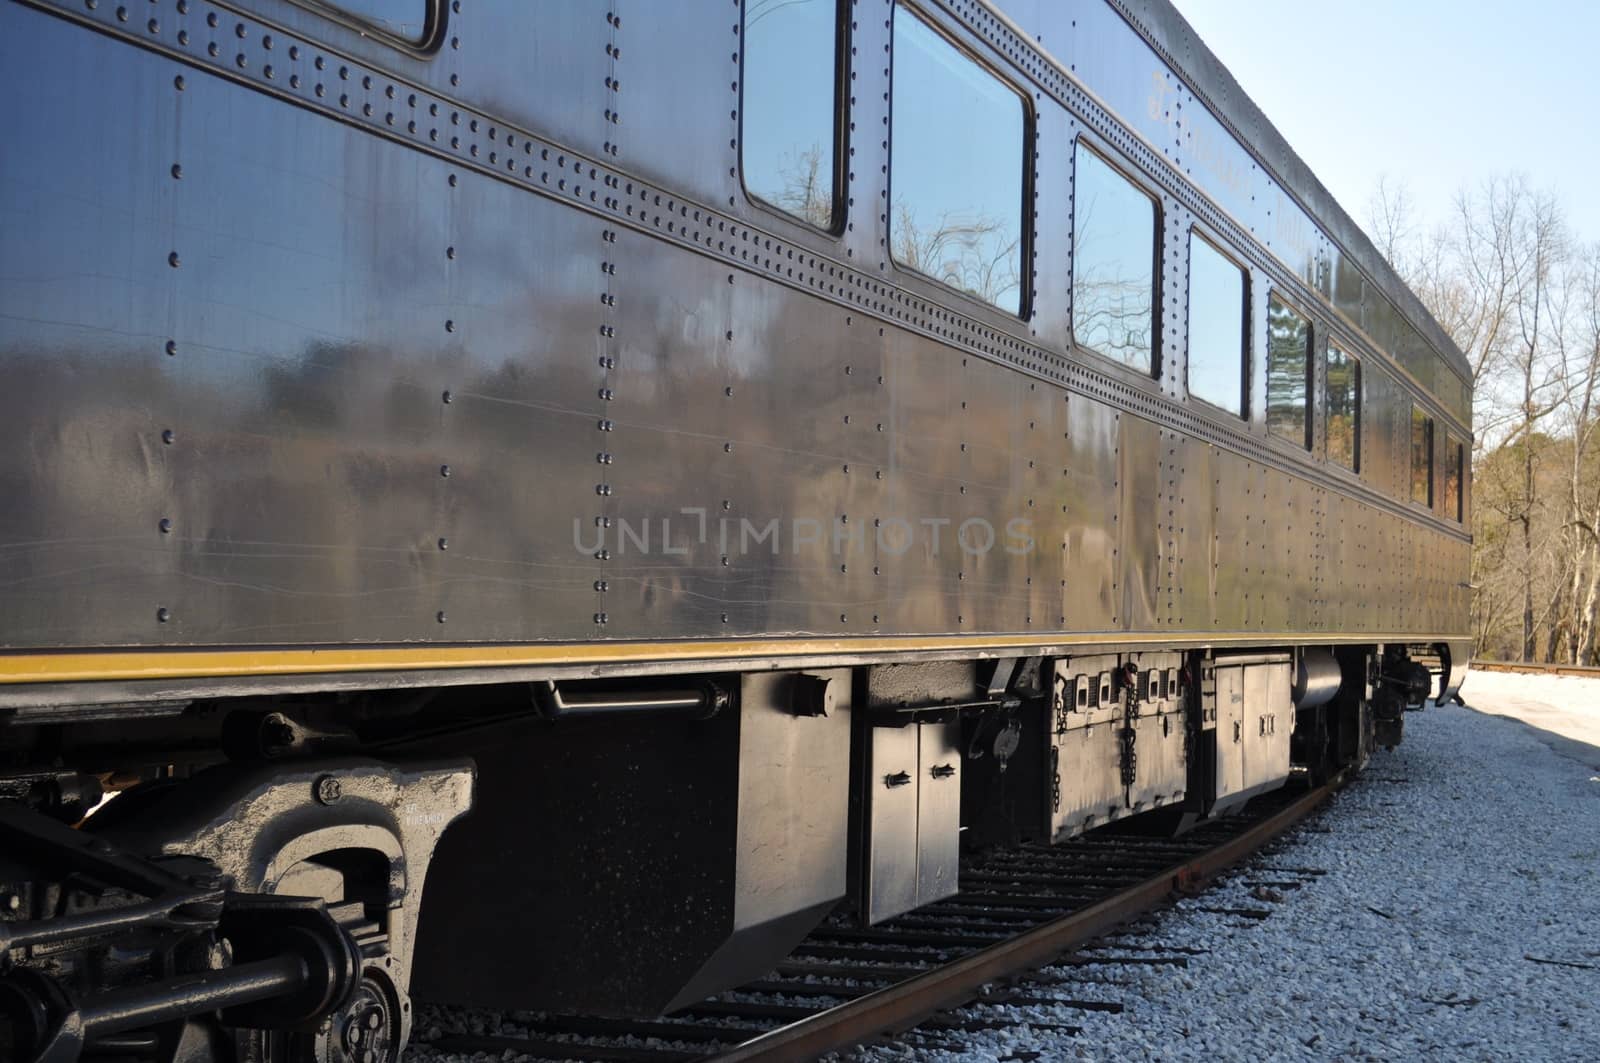 Chattanooga Locomotive